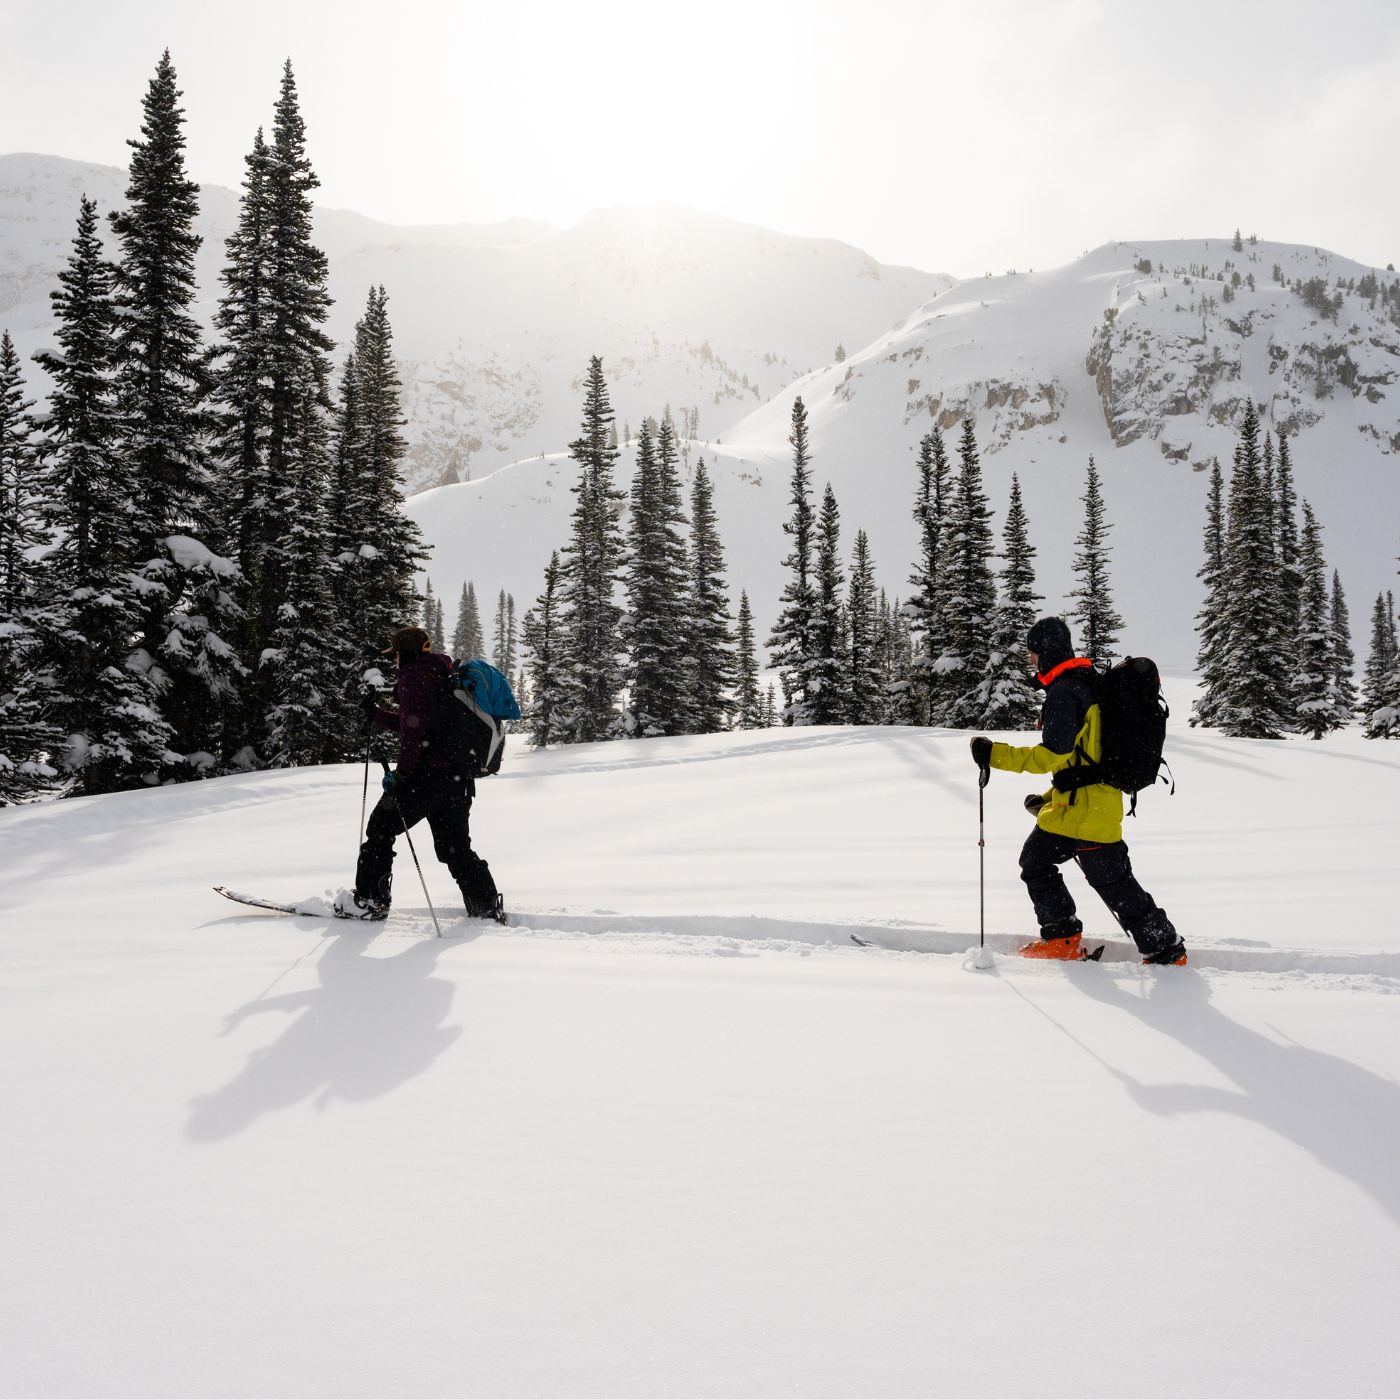 Backcountry skiing, snowfeet walkski backcountry skis, winter, adventures, short skis, snow